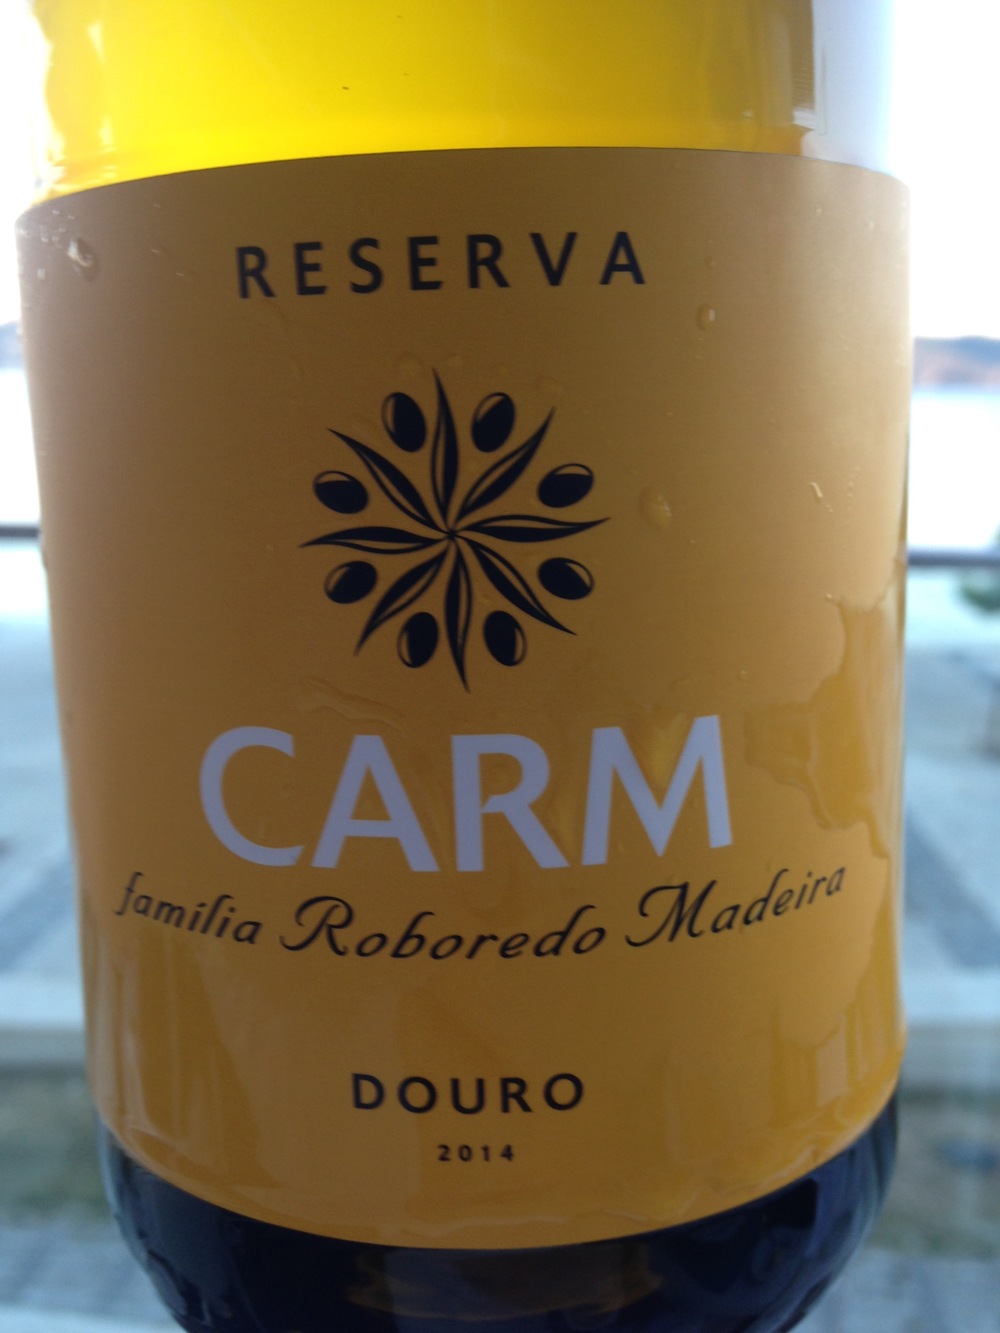 CARM Douro white wine!